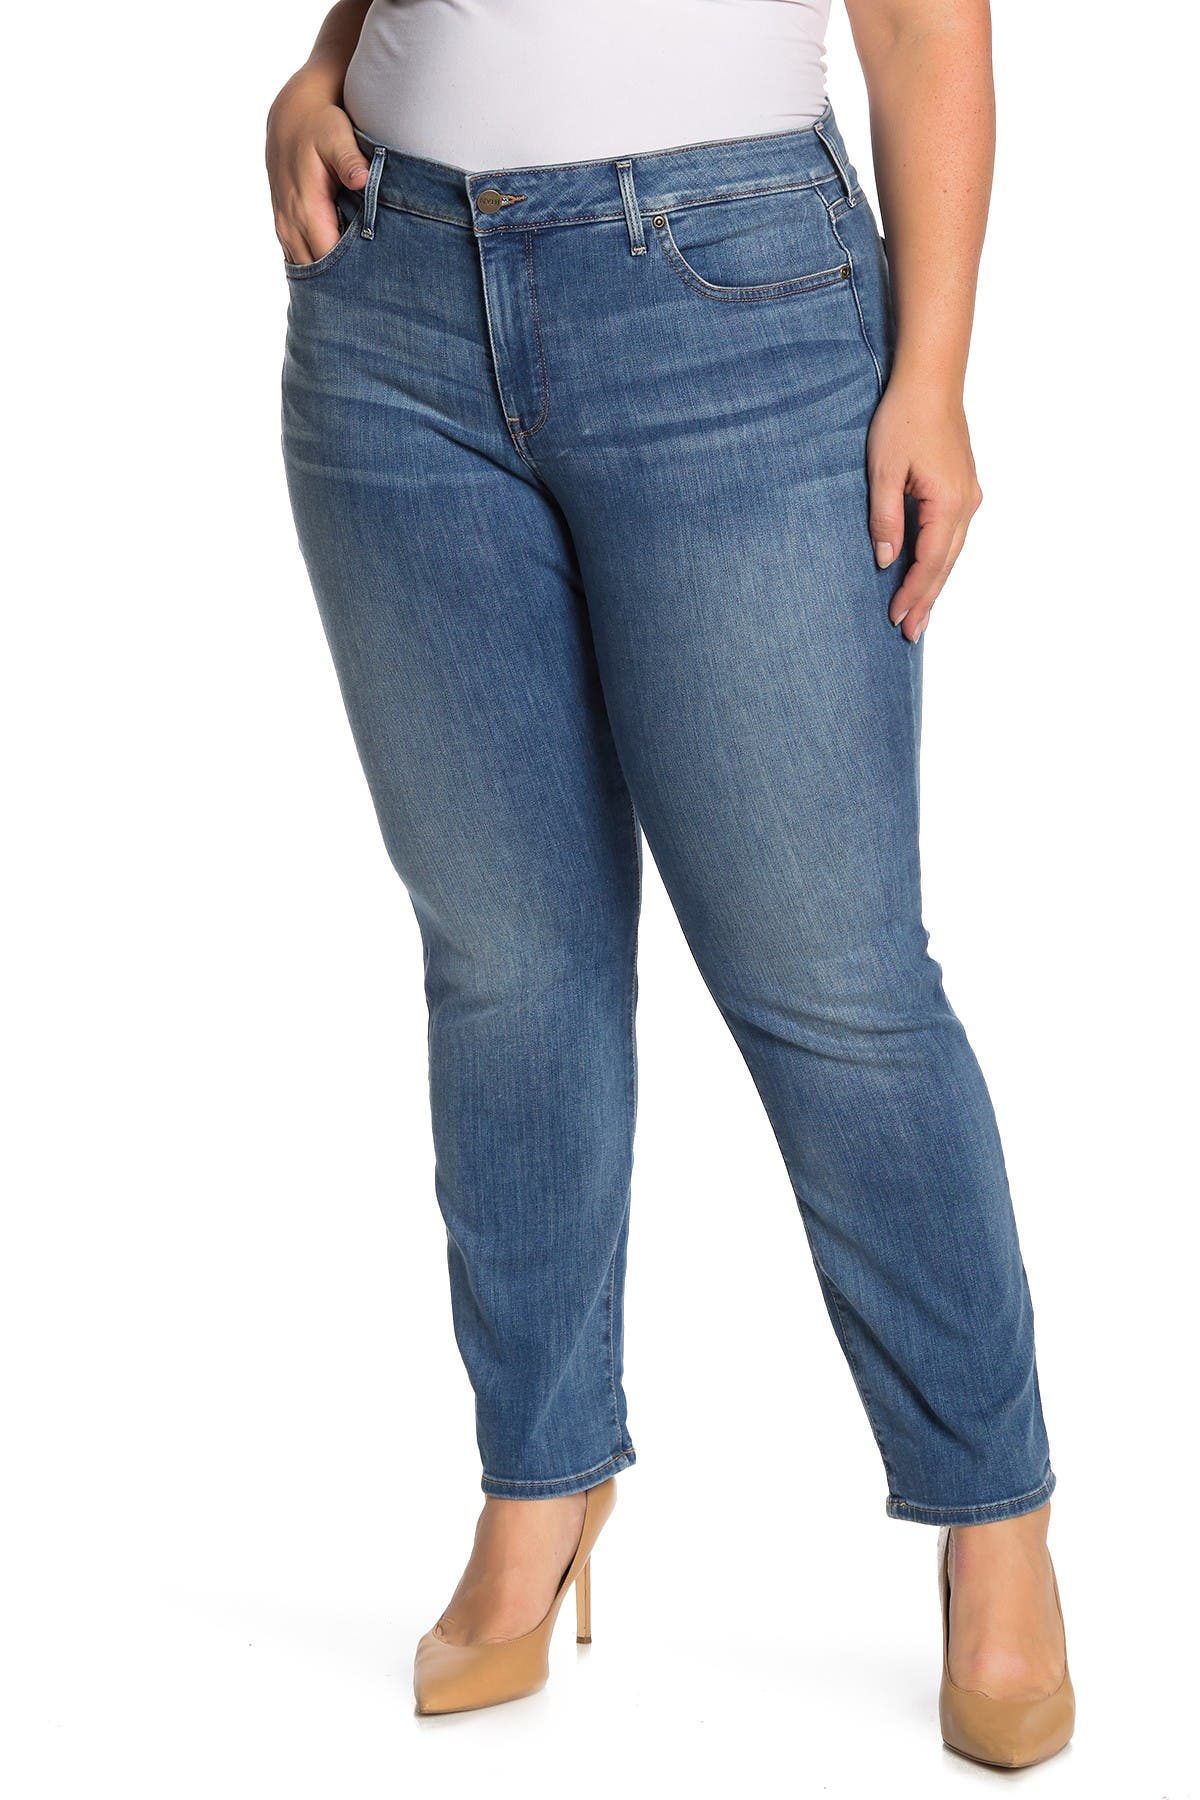 nydj marilyn straight leg jeans plus size